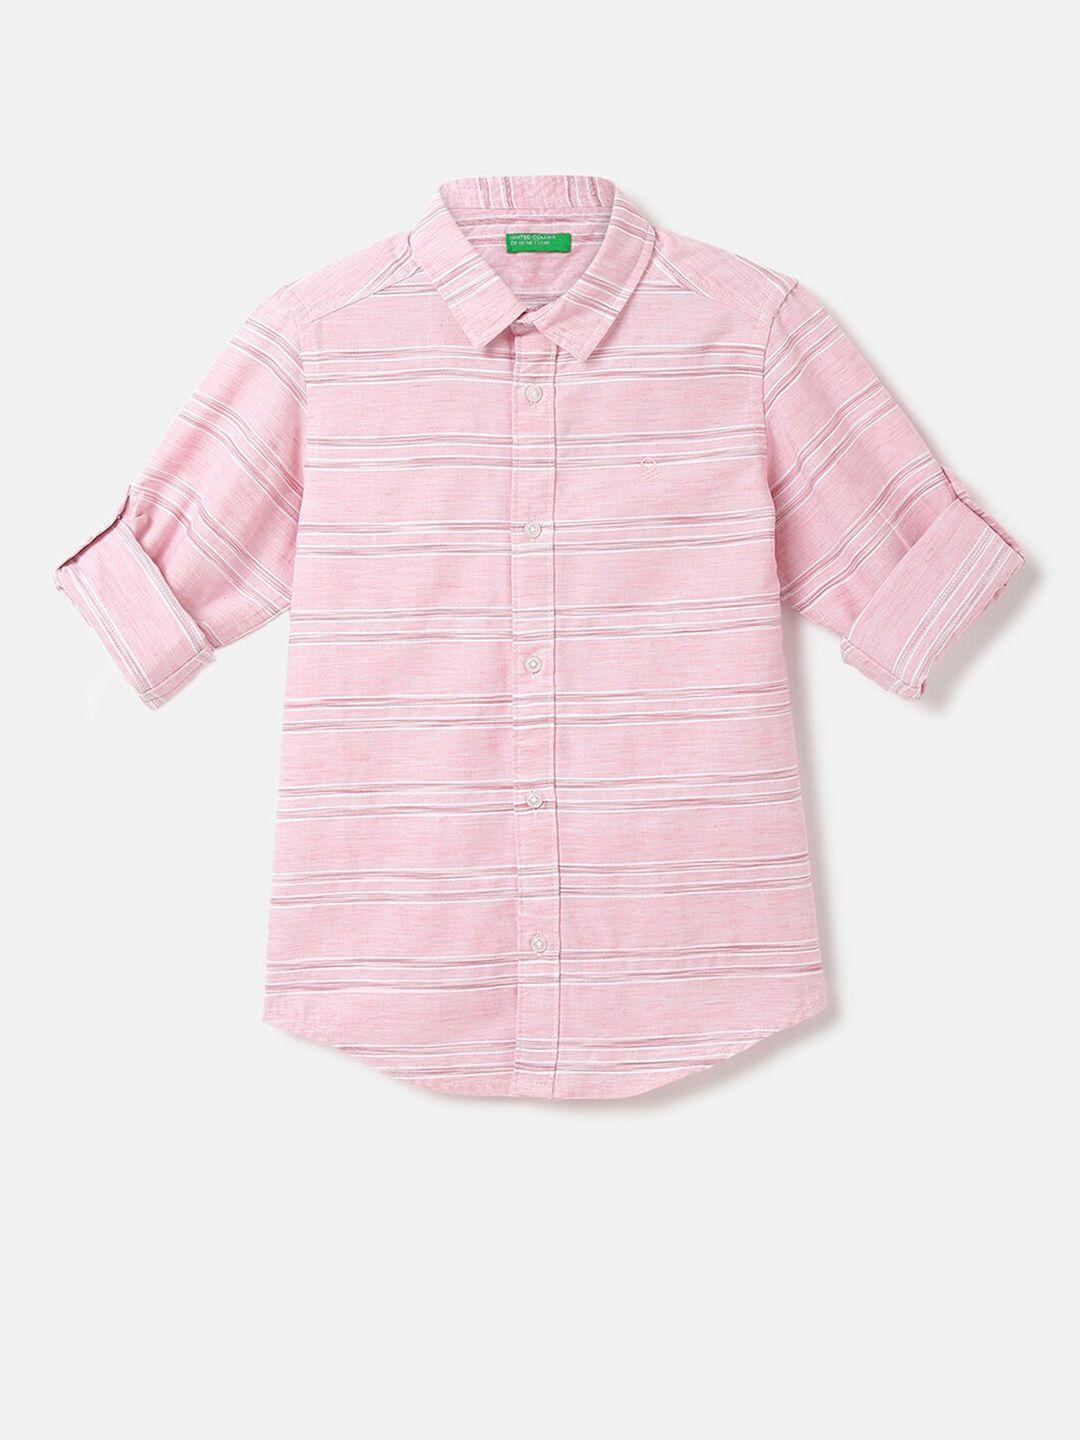 united-colors-of-benetton-boys-cotton-horizontal-stripes-casual-shirt